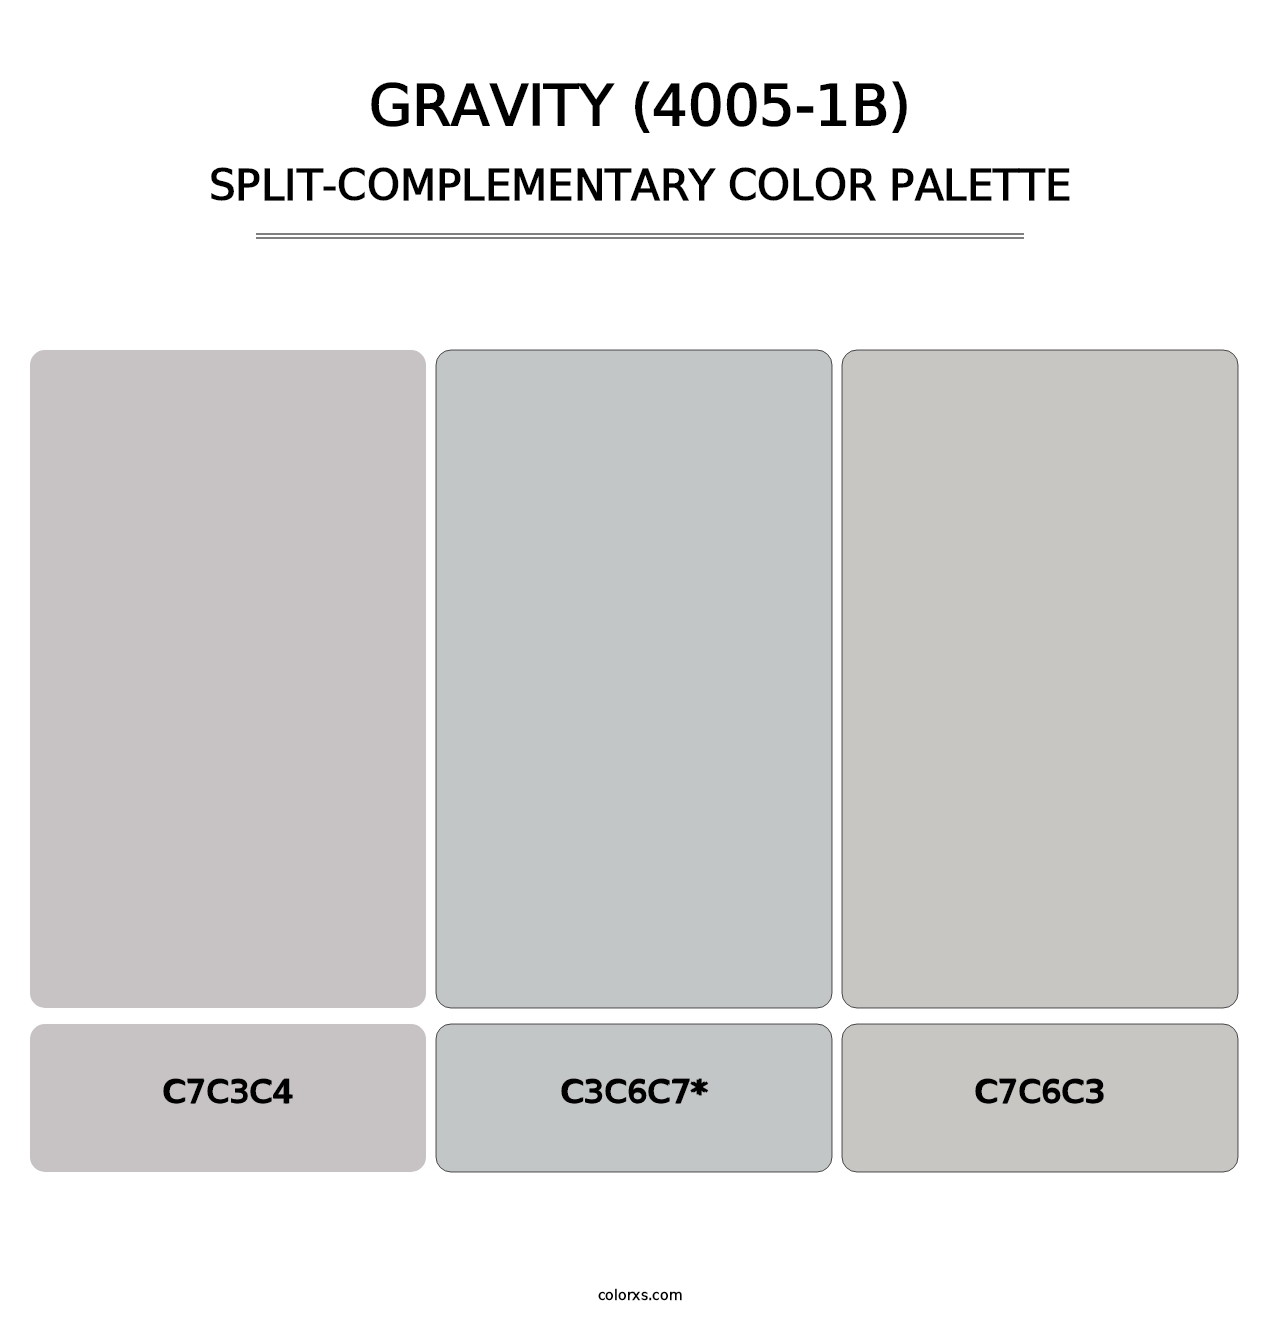 Gravity (4005-1B) - Split-Complementary Color Palette